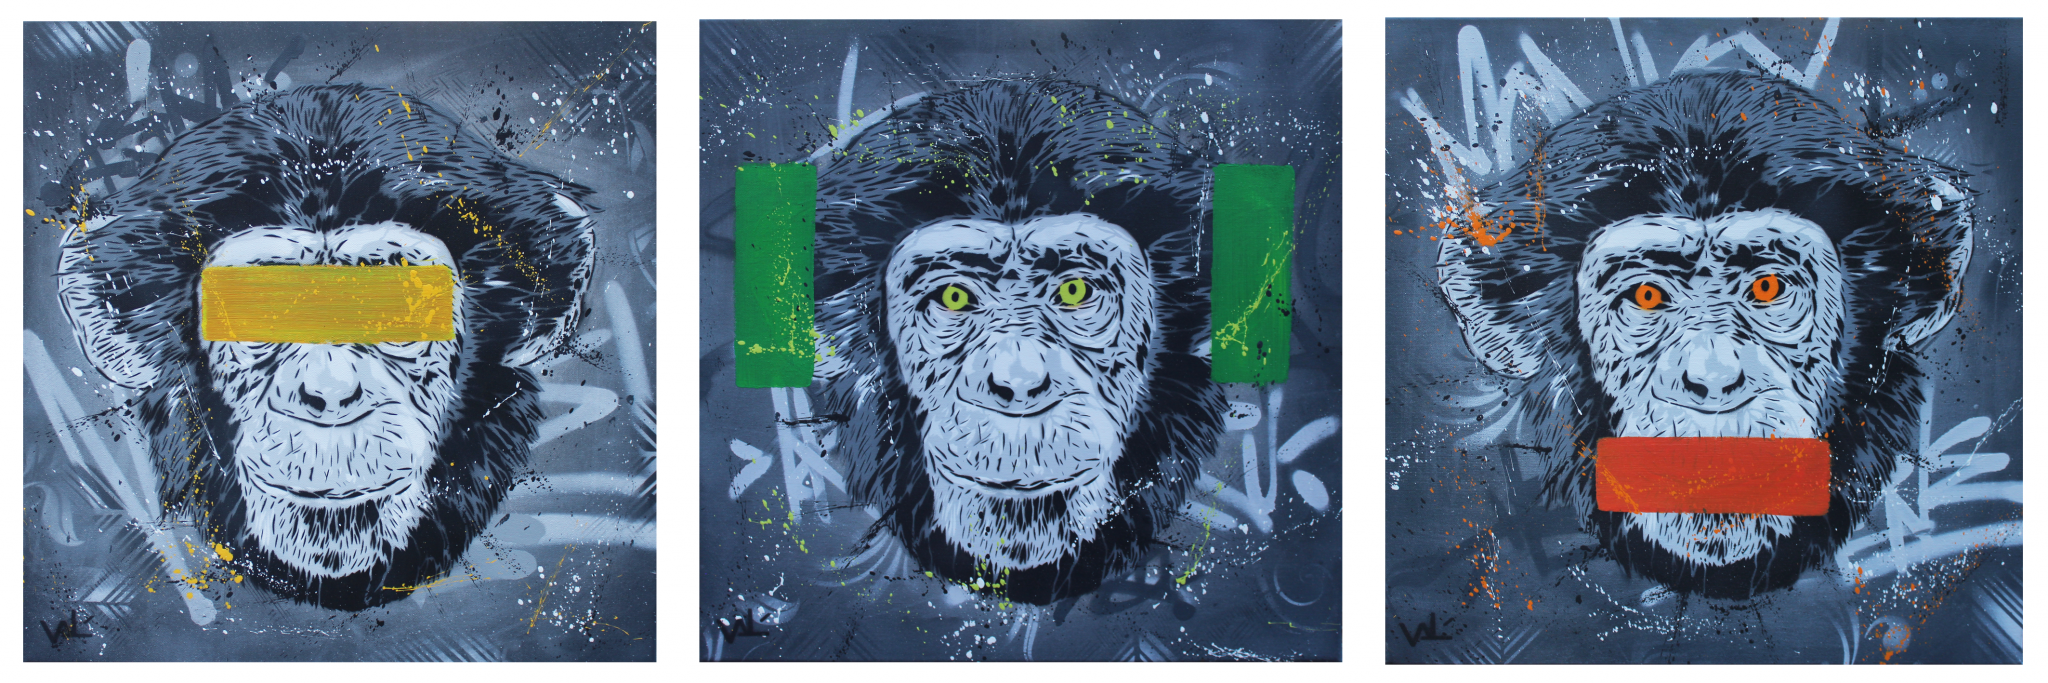 Three Wise Monkeys - Street art Spray paint